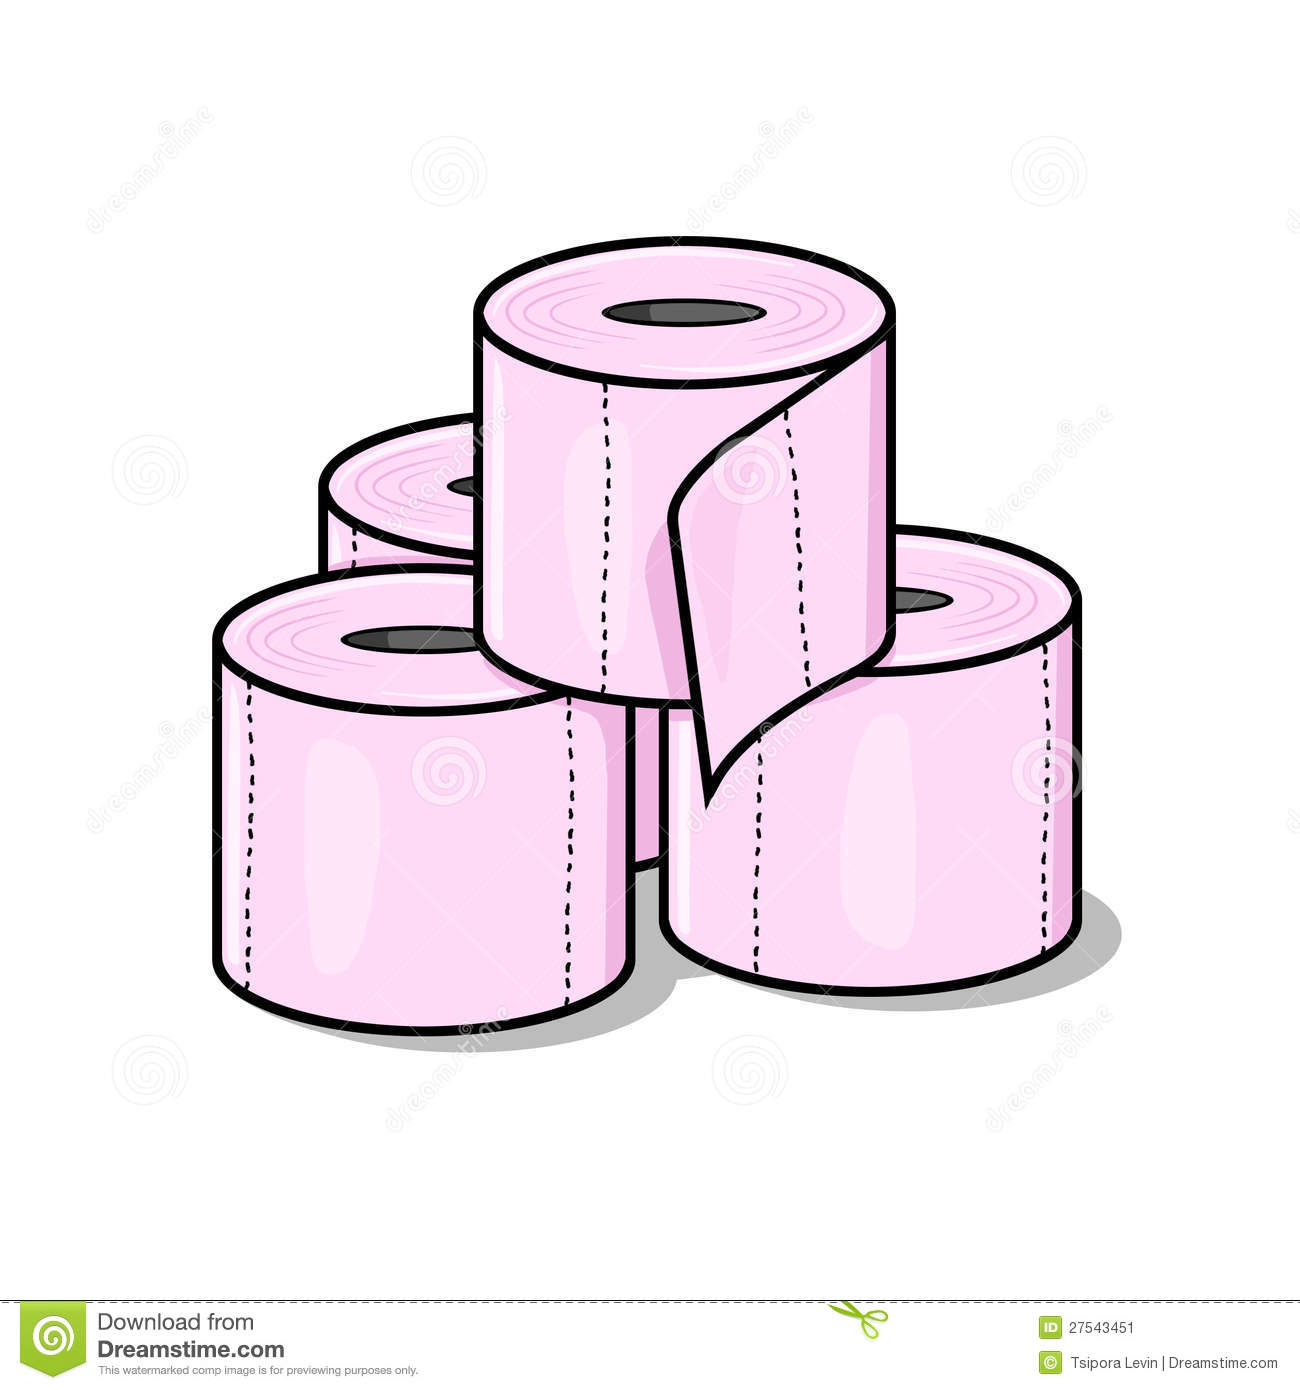 Toilet Paper Rolls Illustration Stock Image.